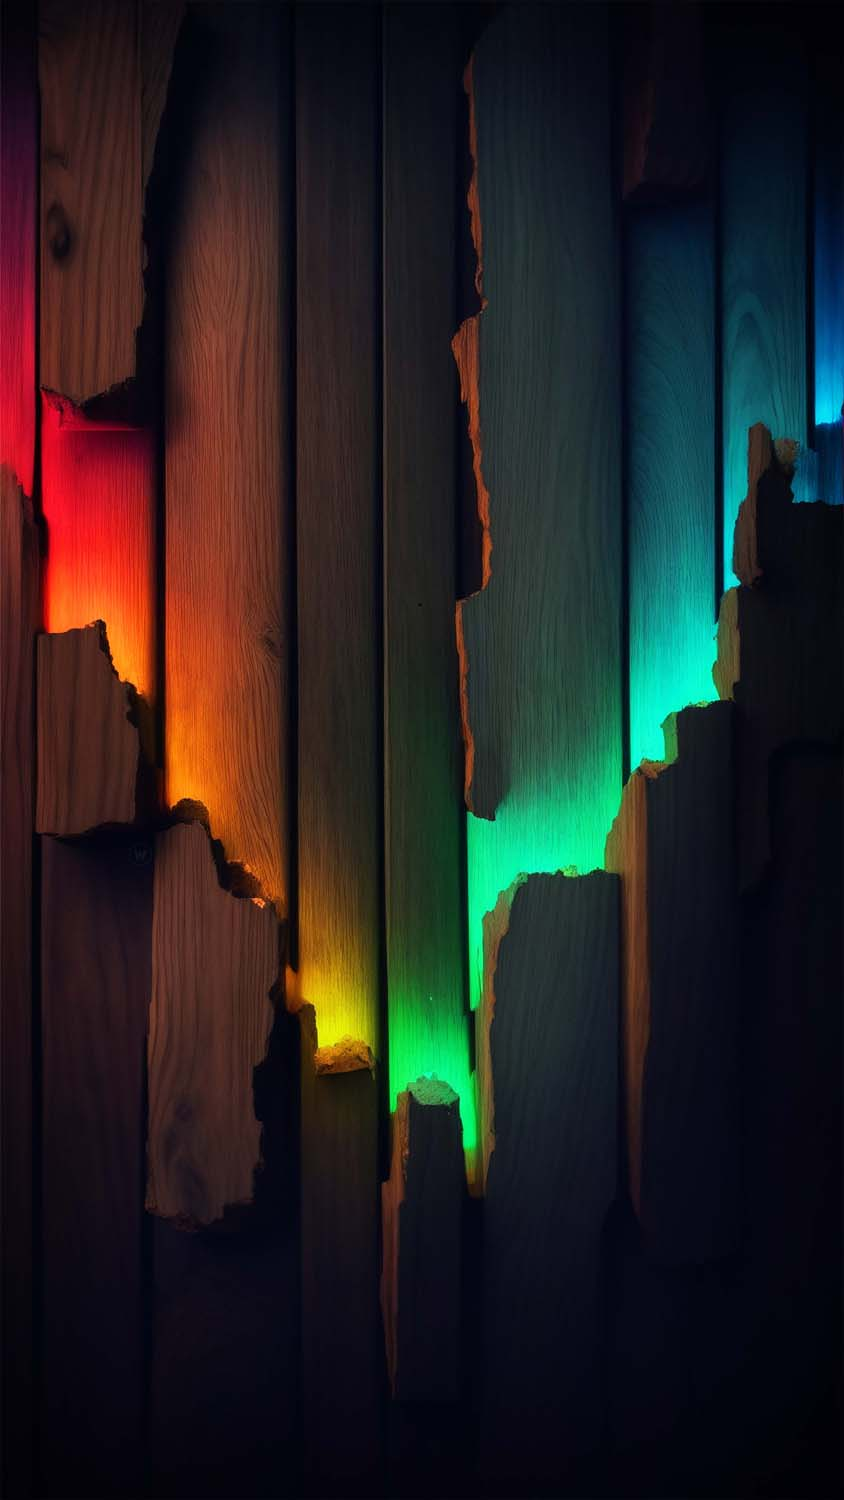 Wood RGB Light iPhone Wallpaper 4K  iPhone Wallpapers